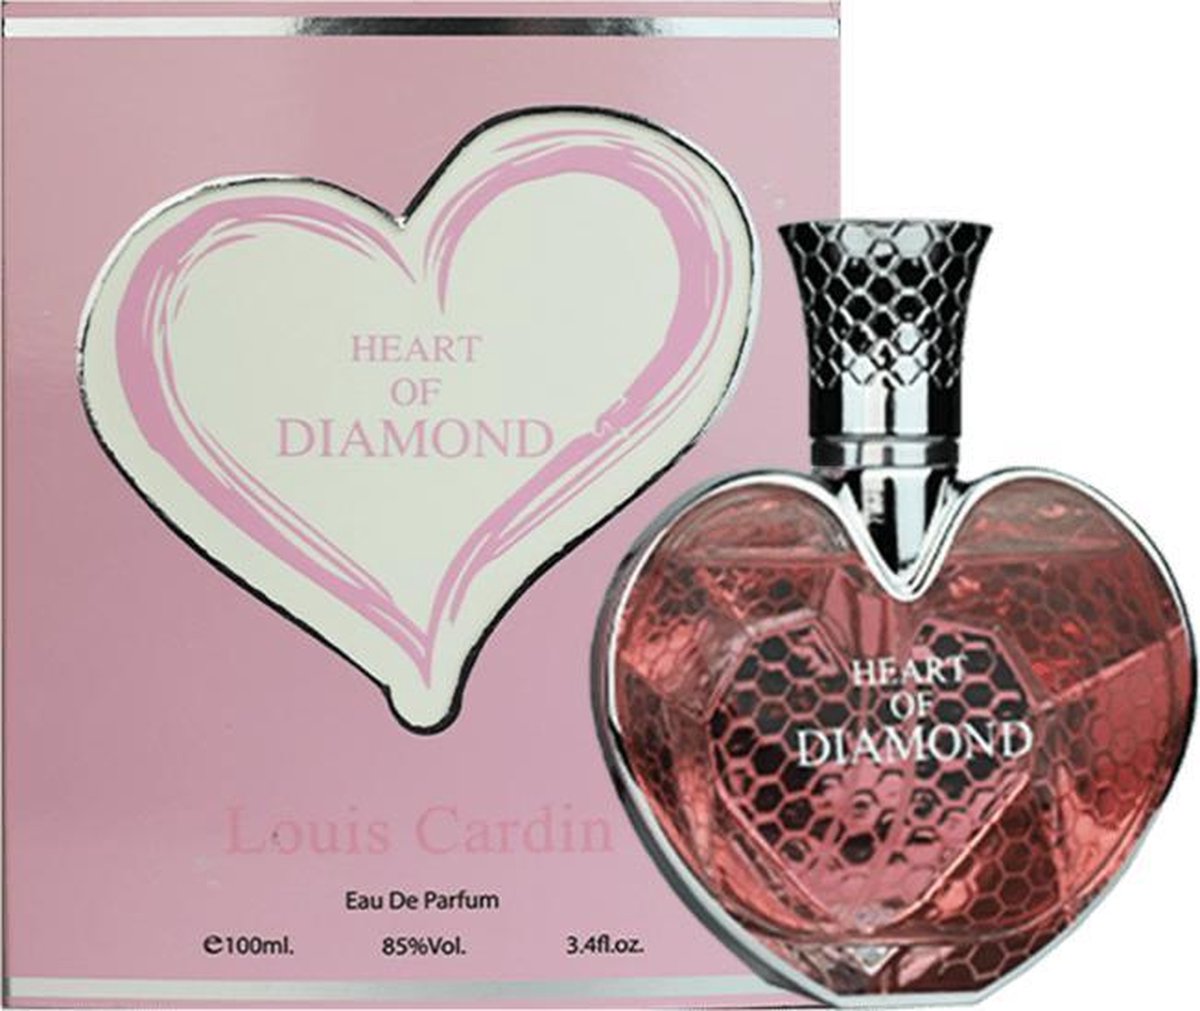 Louis Cardin Heart of Diamond EDP for Women 100 ml